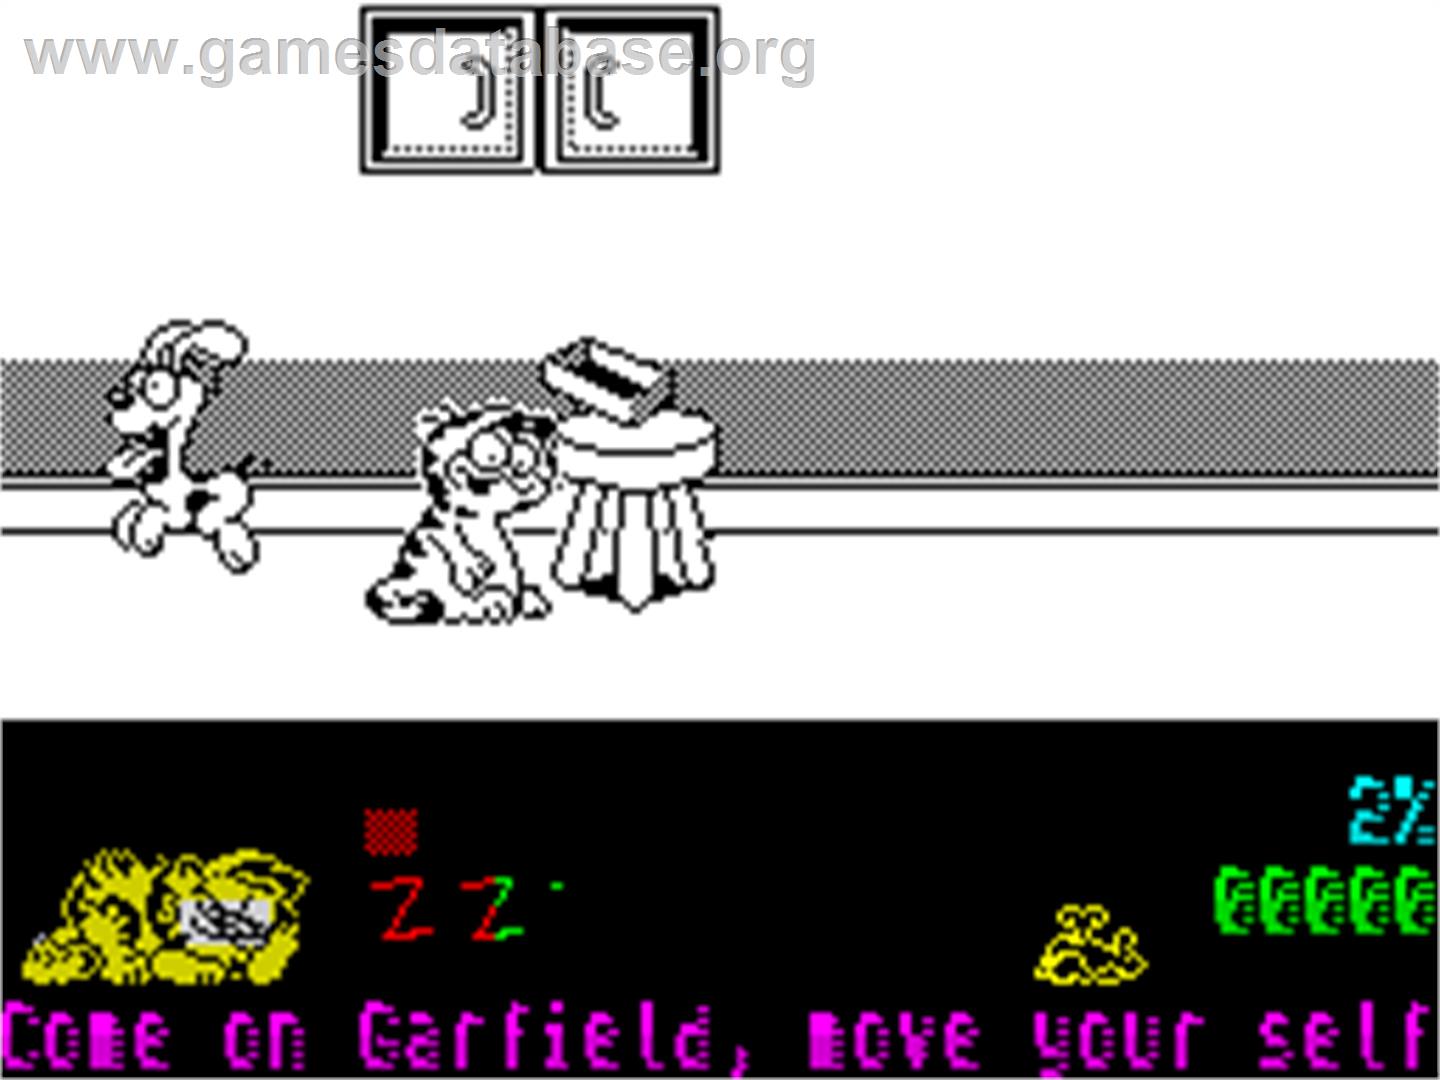 Garfield: Big, Fat, Hairy Deal - Sinclair ZX Spectrum - Artwork - In Game